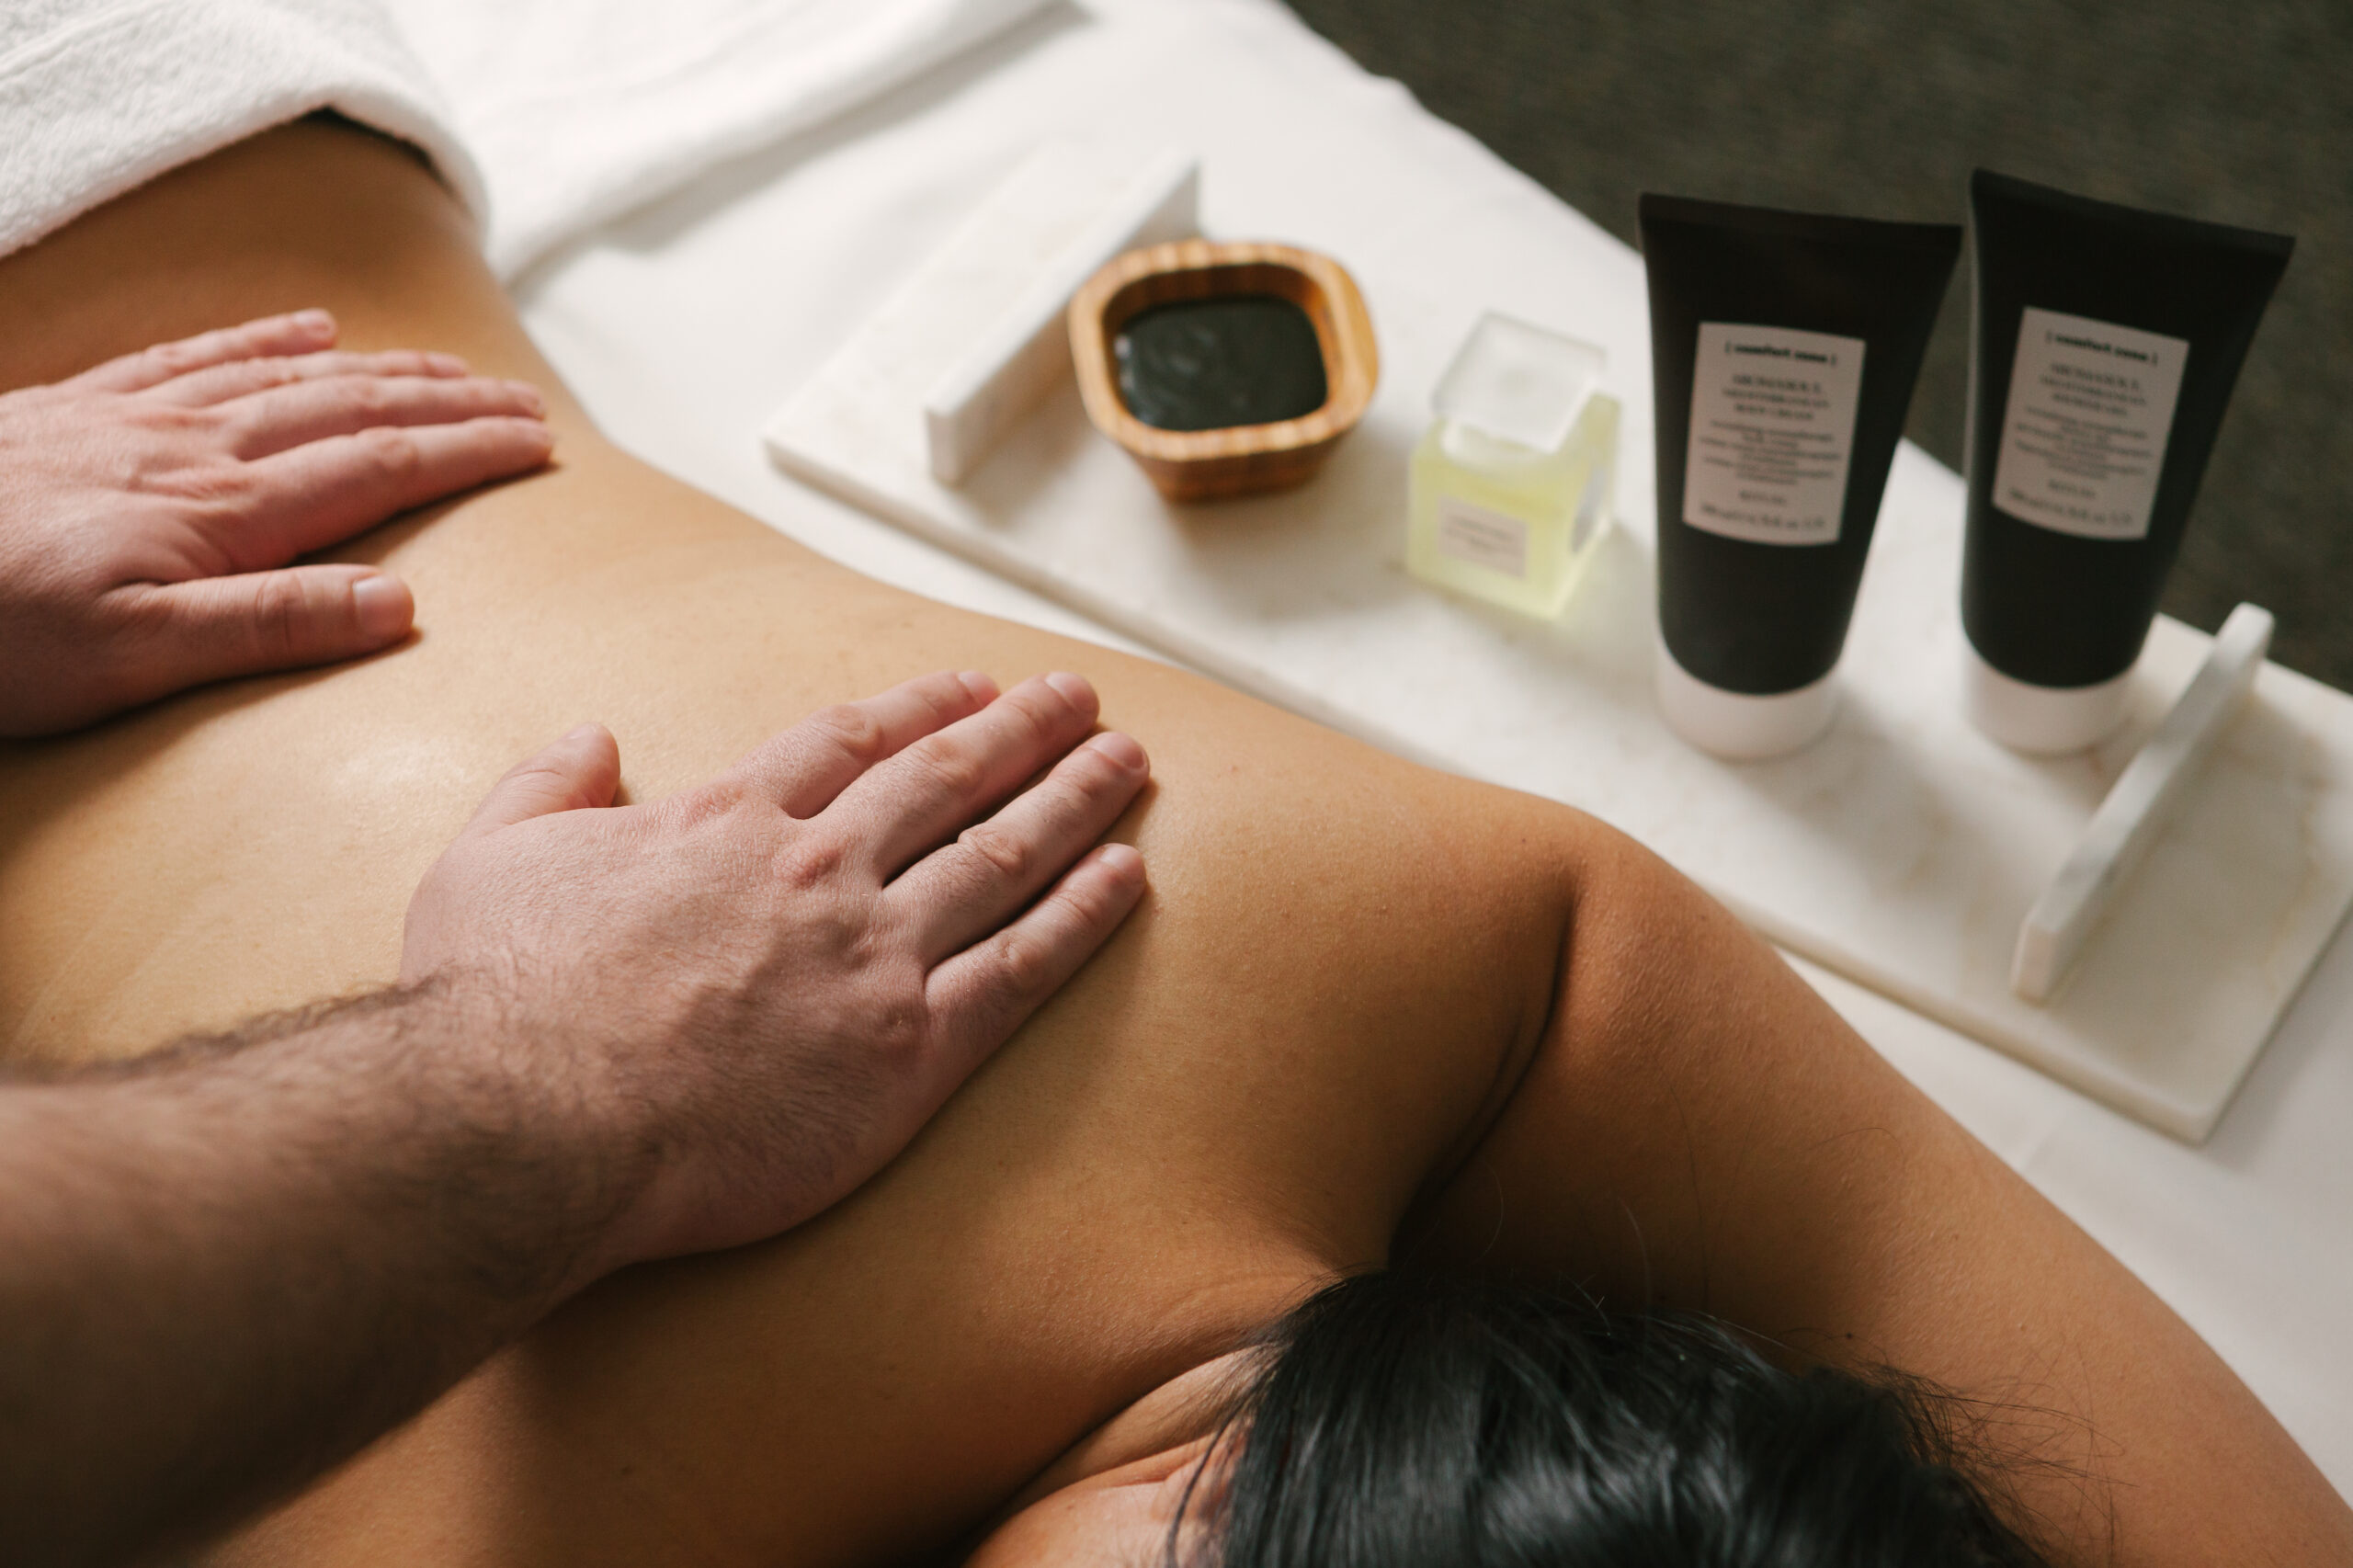 Glen Ivy massage therapy